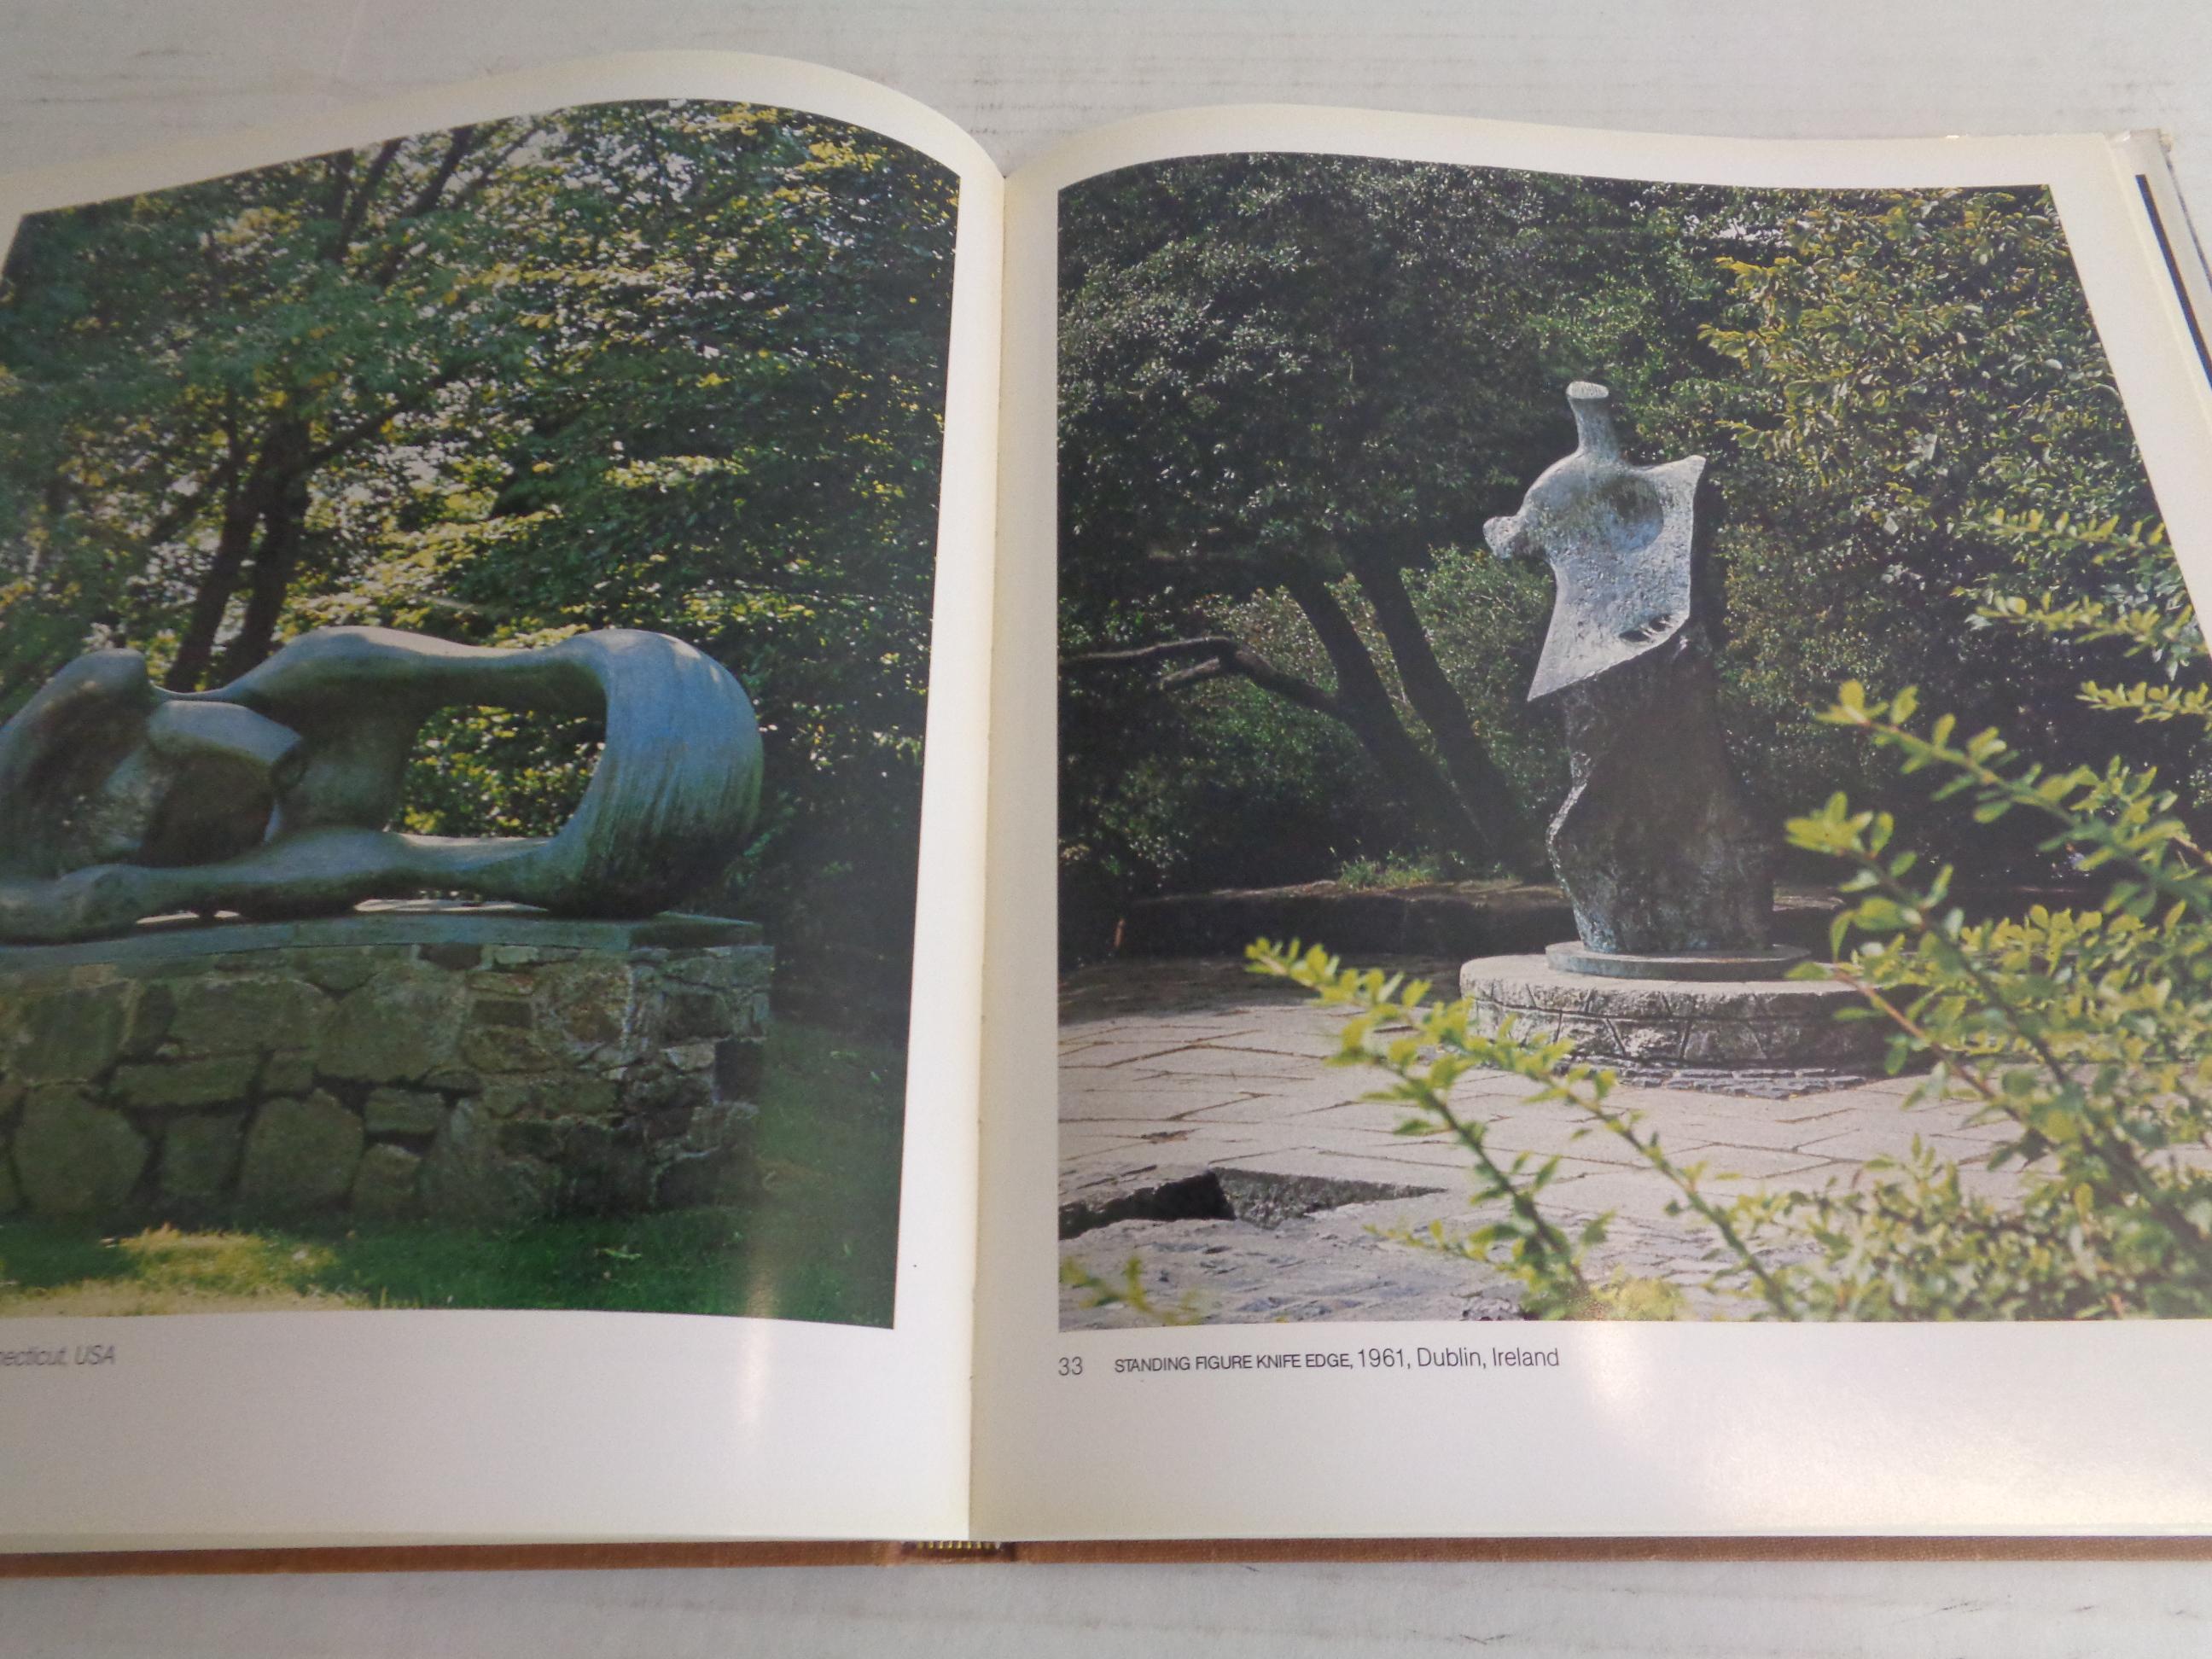 Henry Moore Sculptures in Landscape - 1978 Clarkson N. Potter - 1st Edition For Sale 10